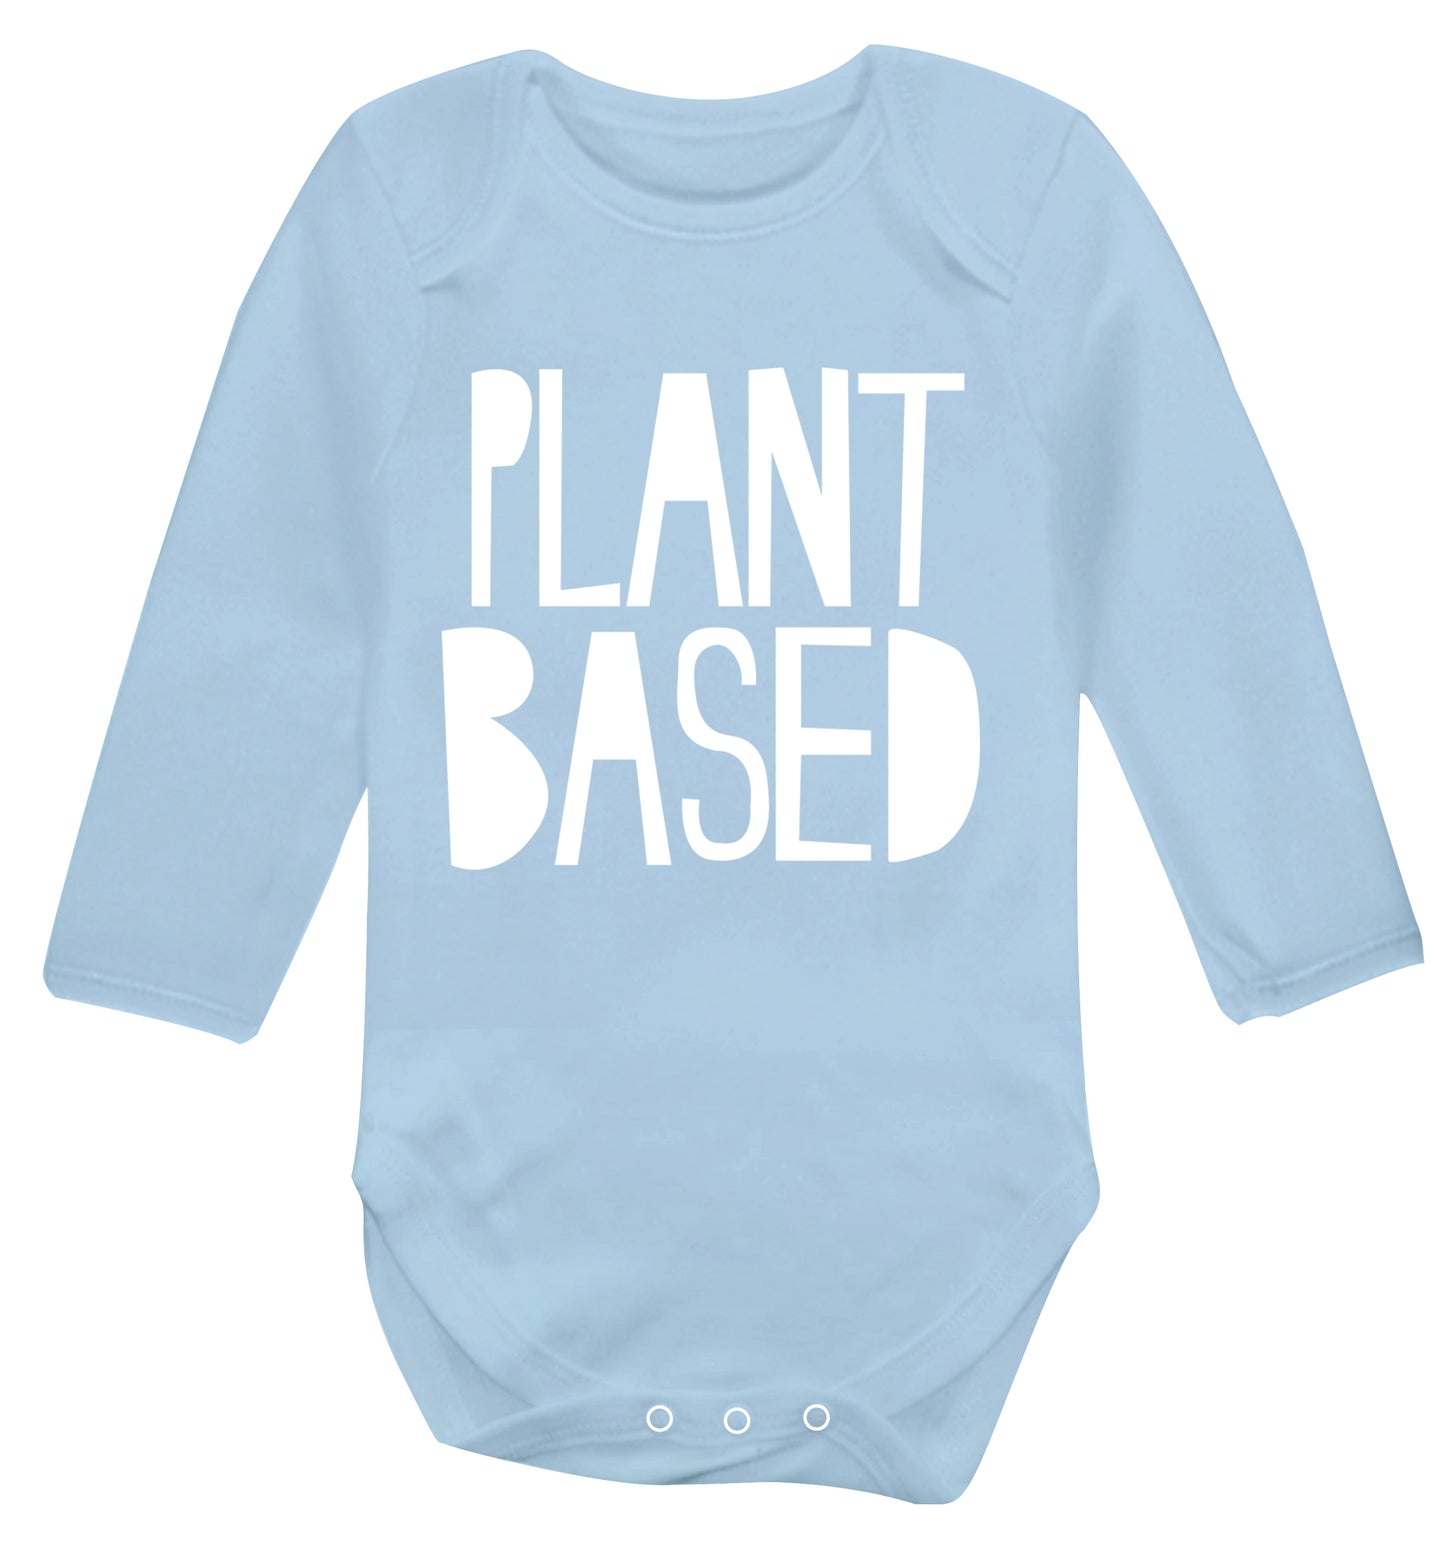 Plant Based Baby Vest long sleeved pale blue 6-12 months